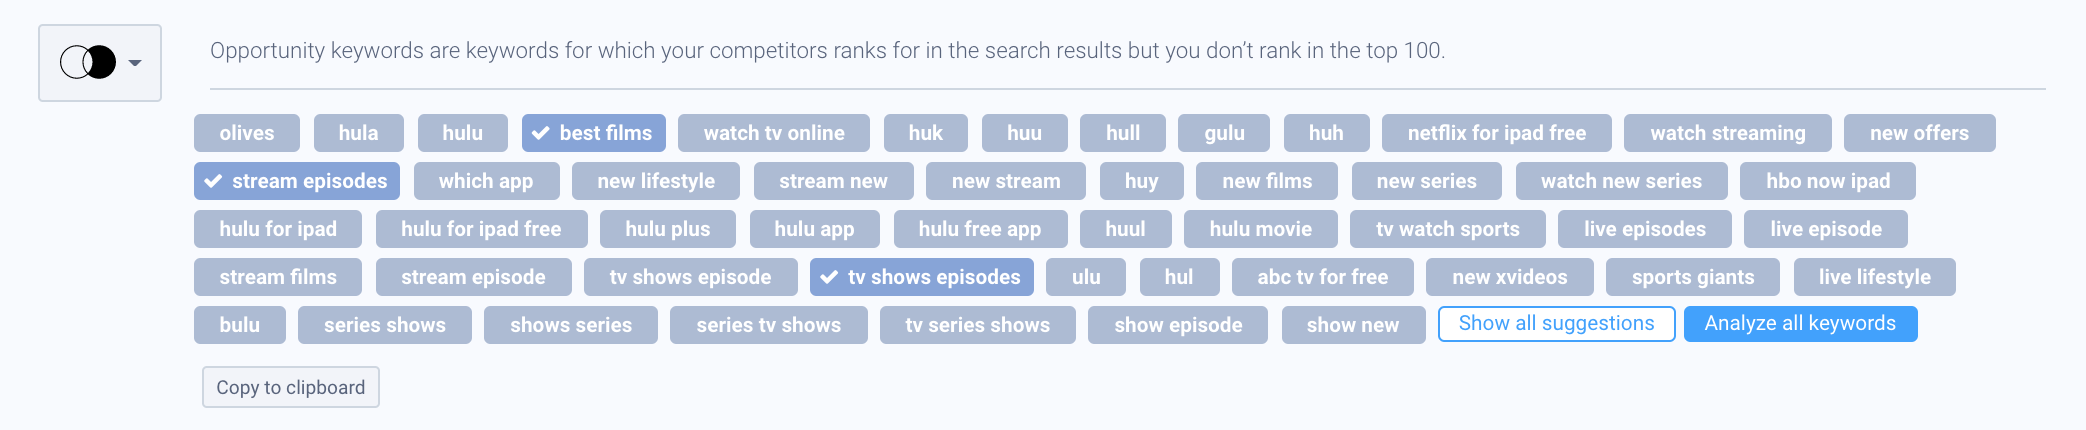 Opportunity Keywords for Hulu